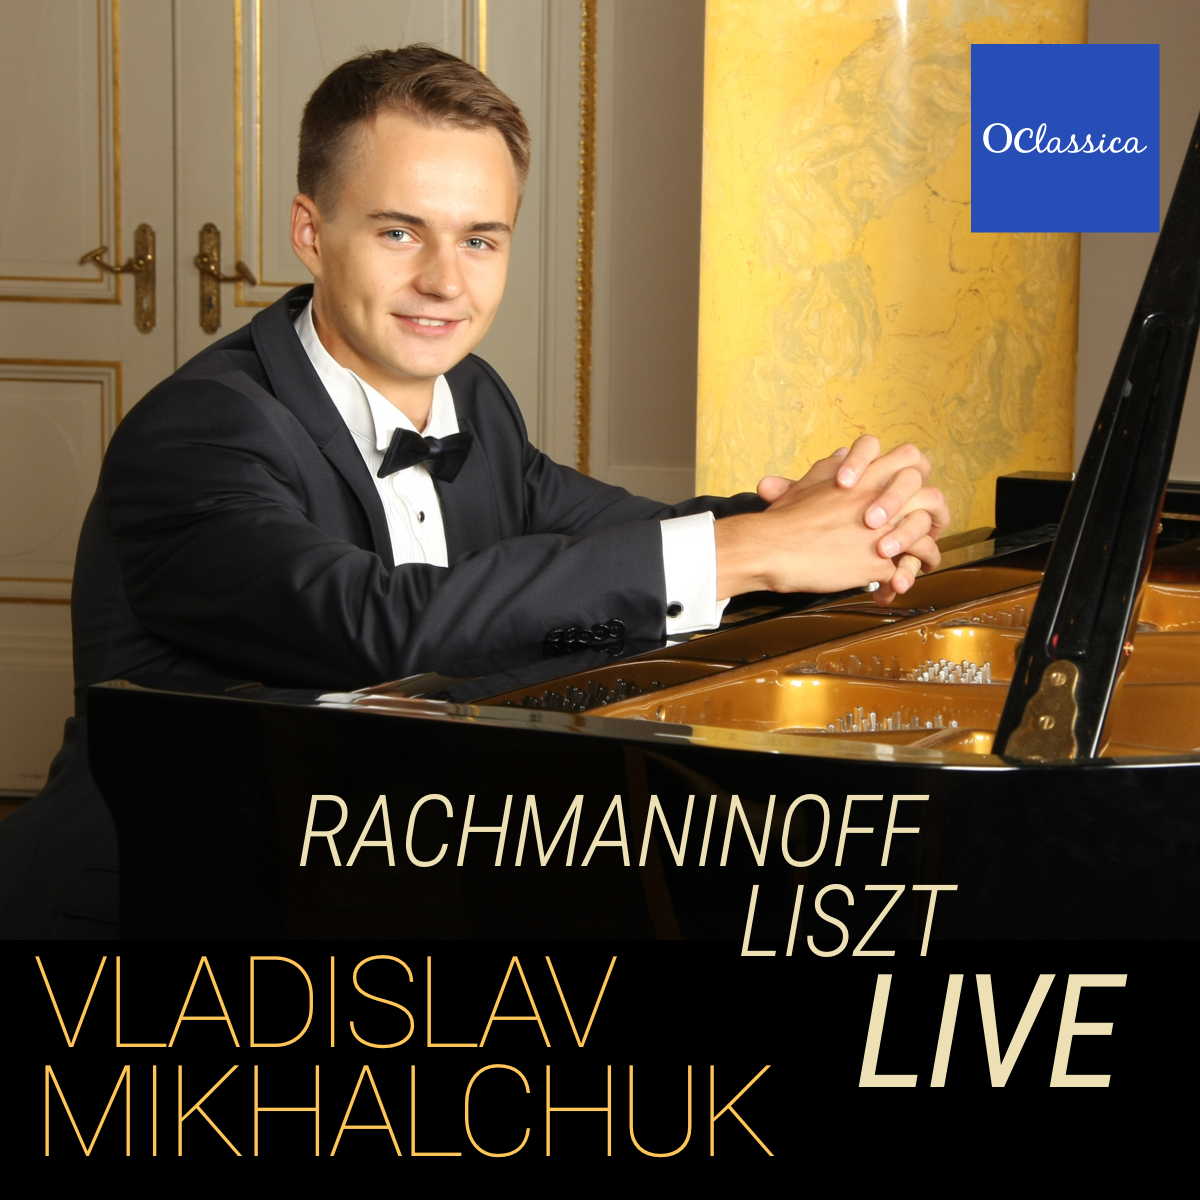 Rachmaninoff & Liszt (Live) – Vladislav Mikhalchuk